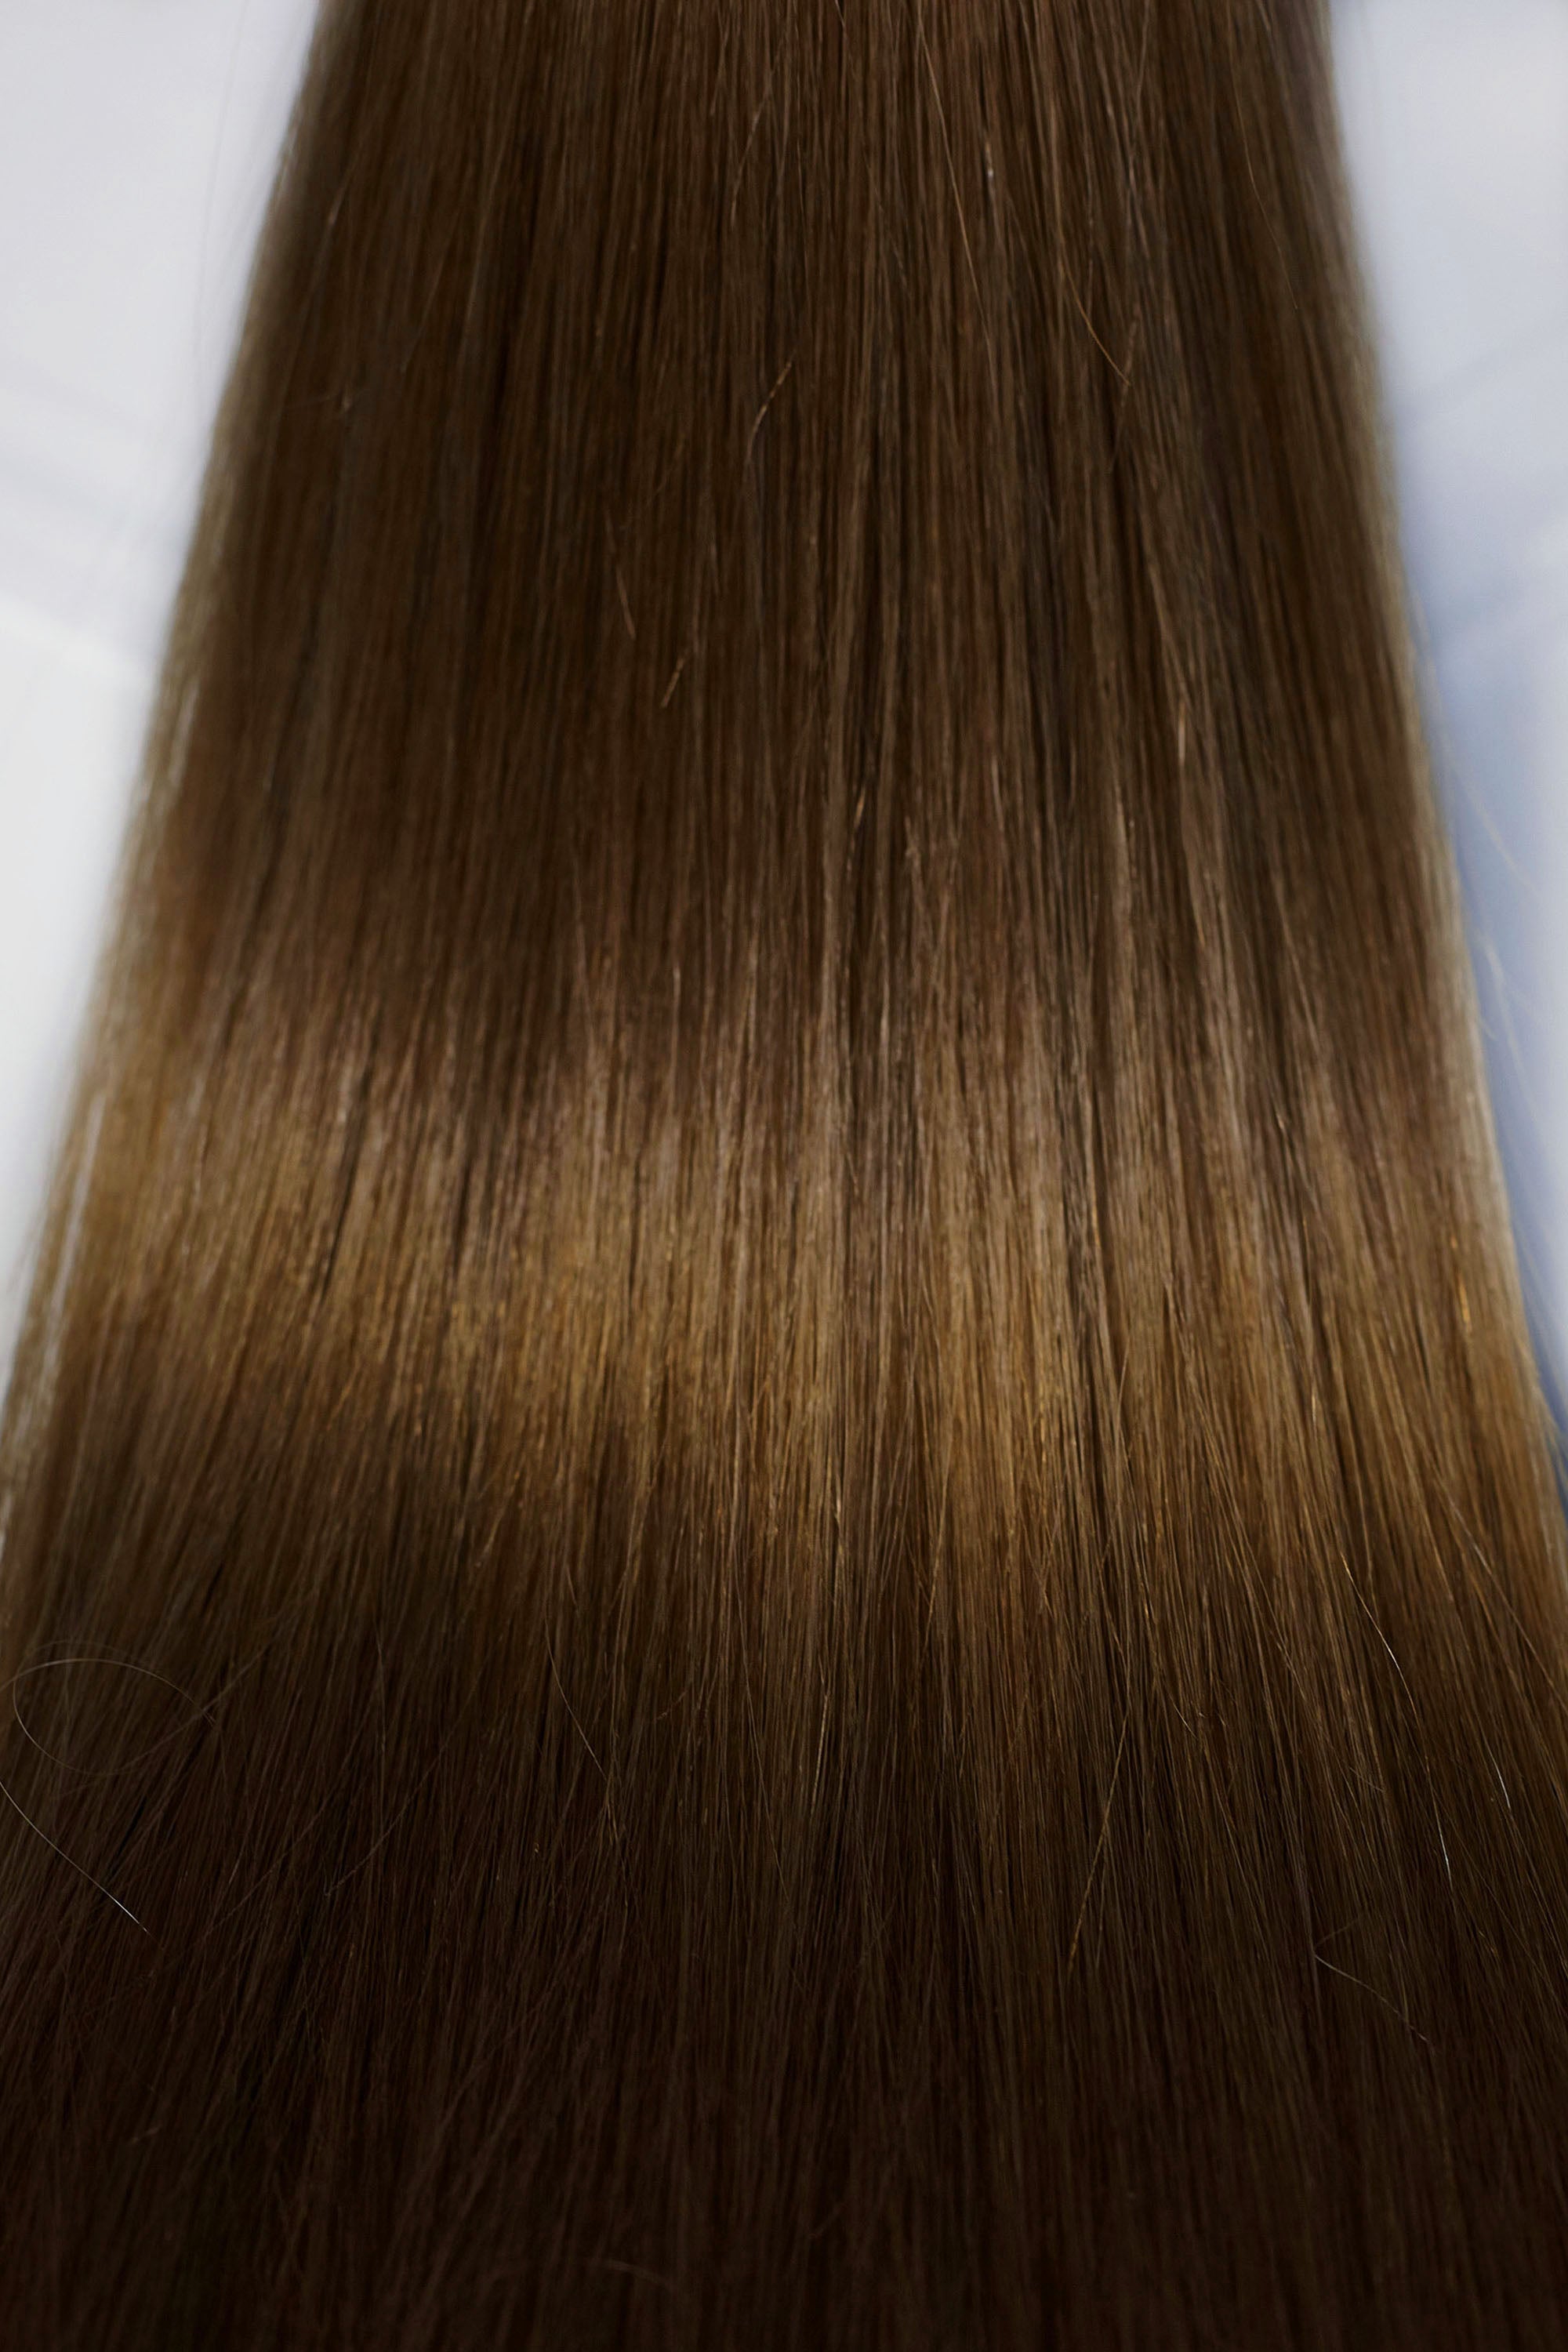 Behair professional Bulk hair "Premium" 22" (55cm) Natural Straight Honey Walnut Brown #5 - 25g hair extensions